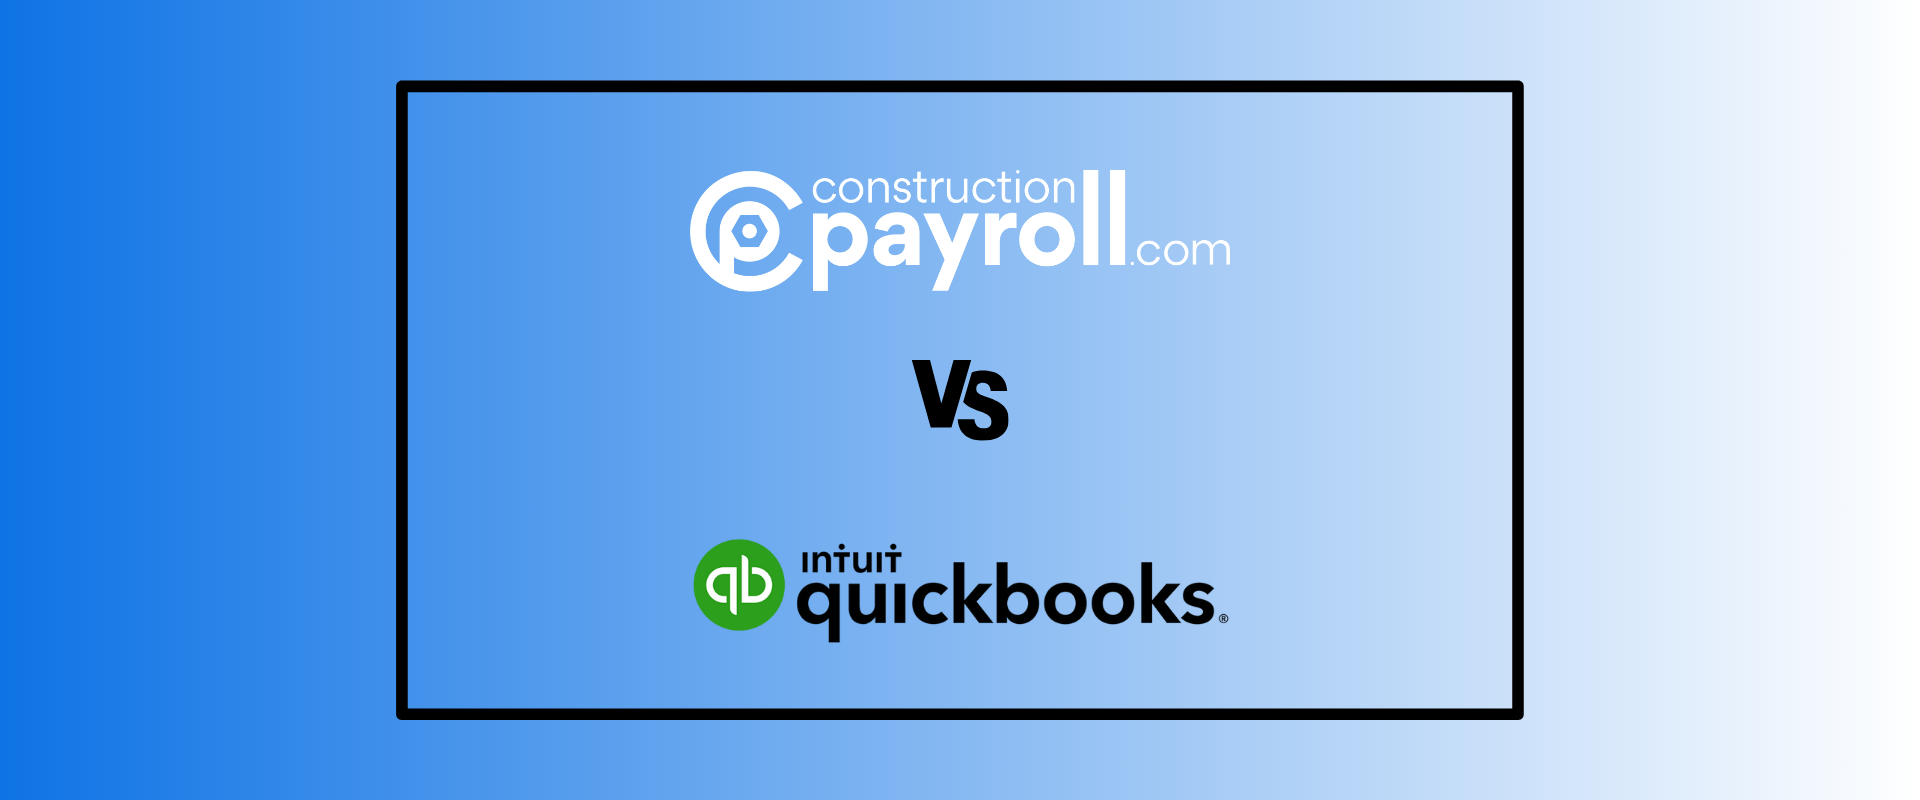 ConstructionPayroll.com versus Quickbooks payroll software